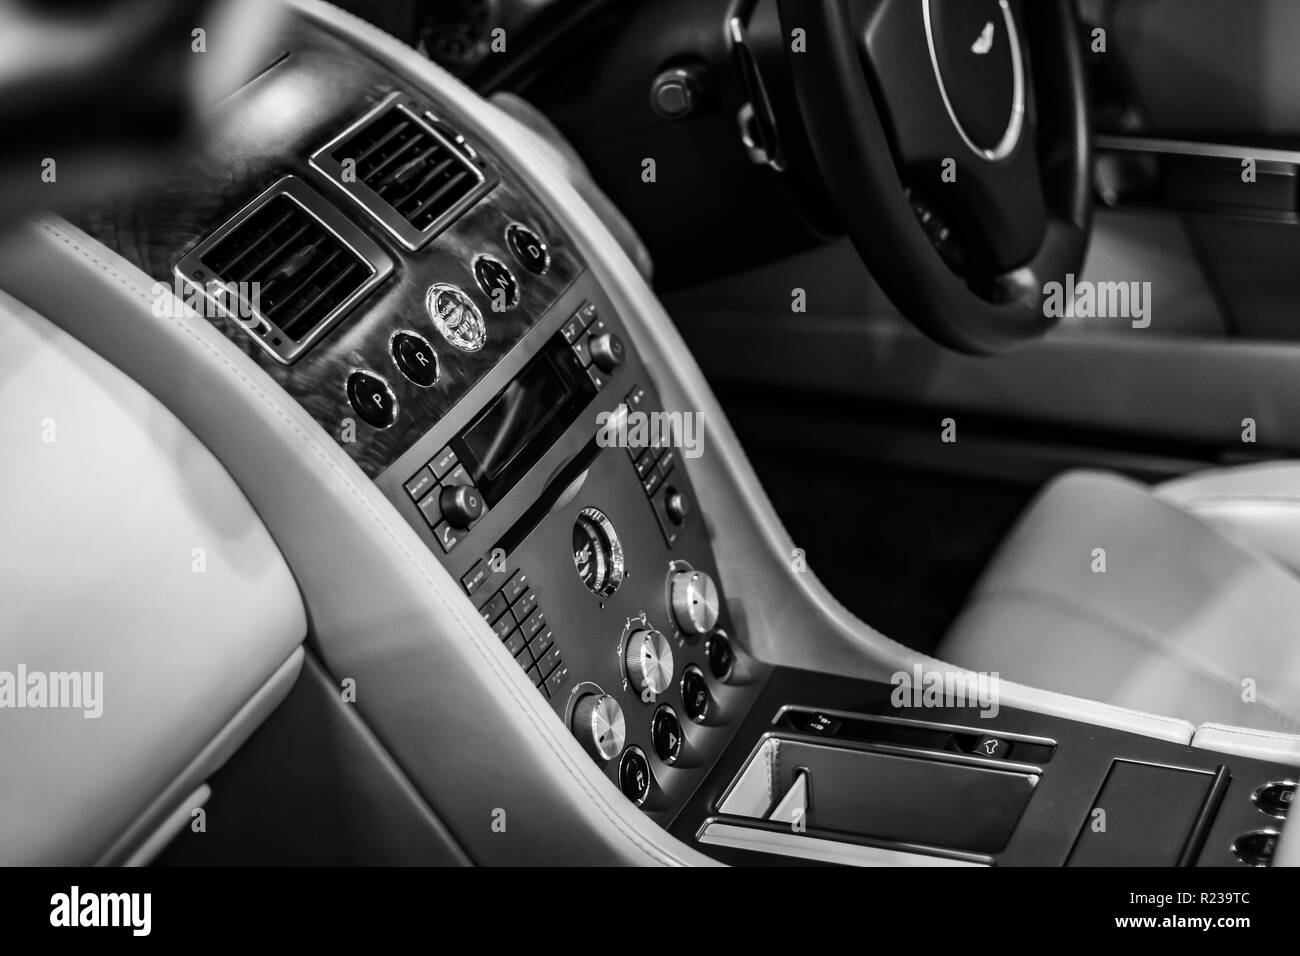 Interior Dashboard Of A Luxury Aston Martin Db9 Car Stock